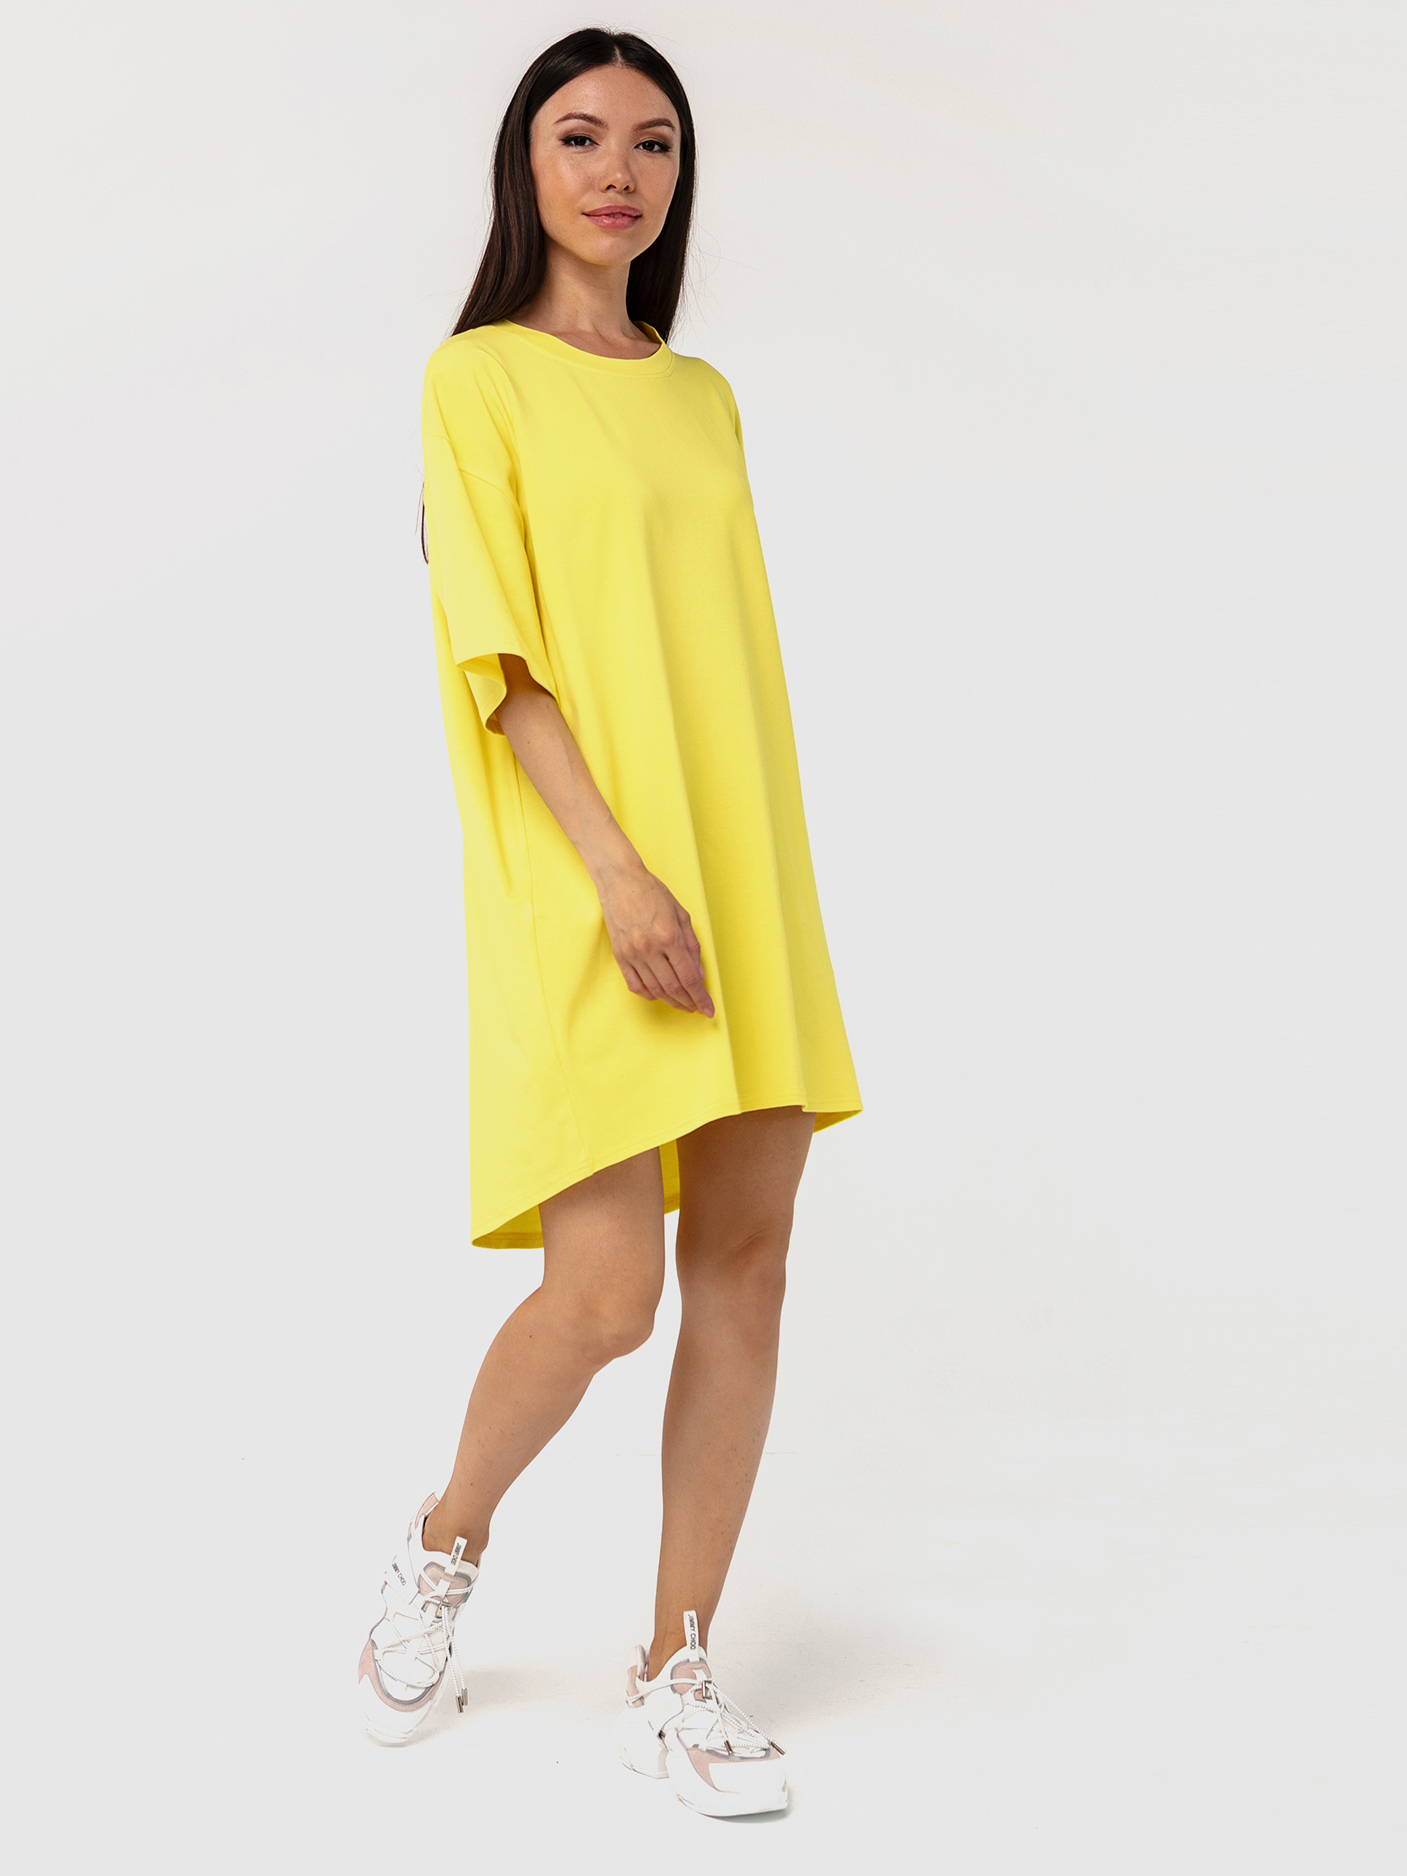 Платье-футболка хлопковое желтое YOS от украинского бренда Your Own Style